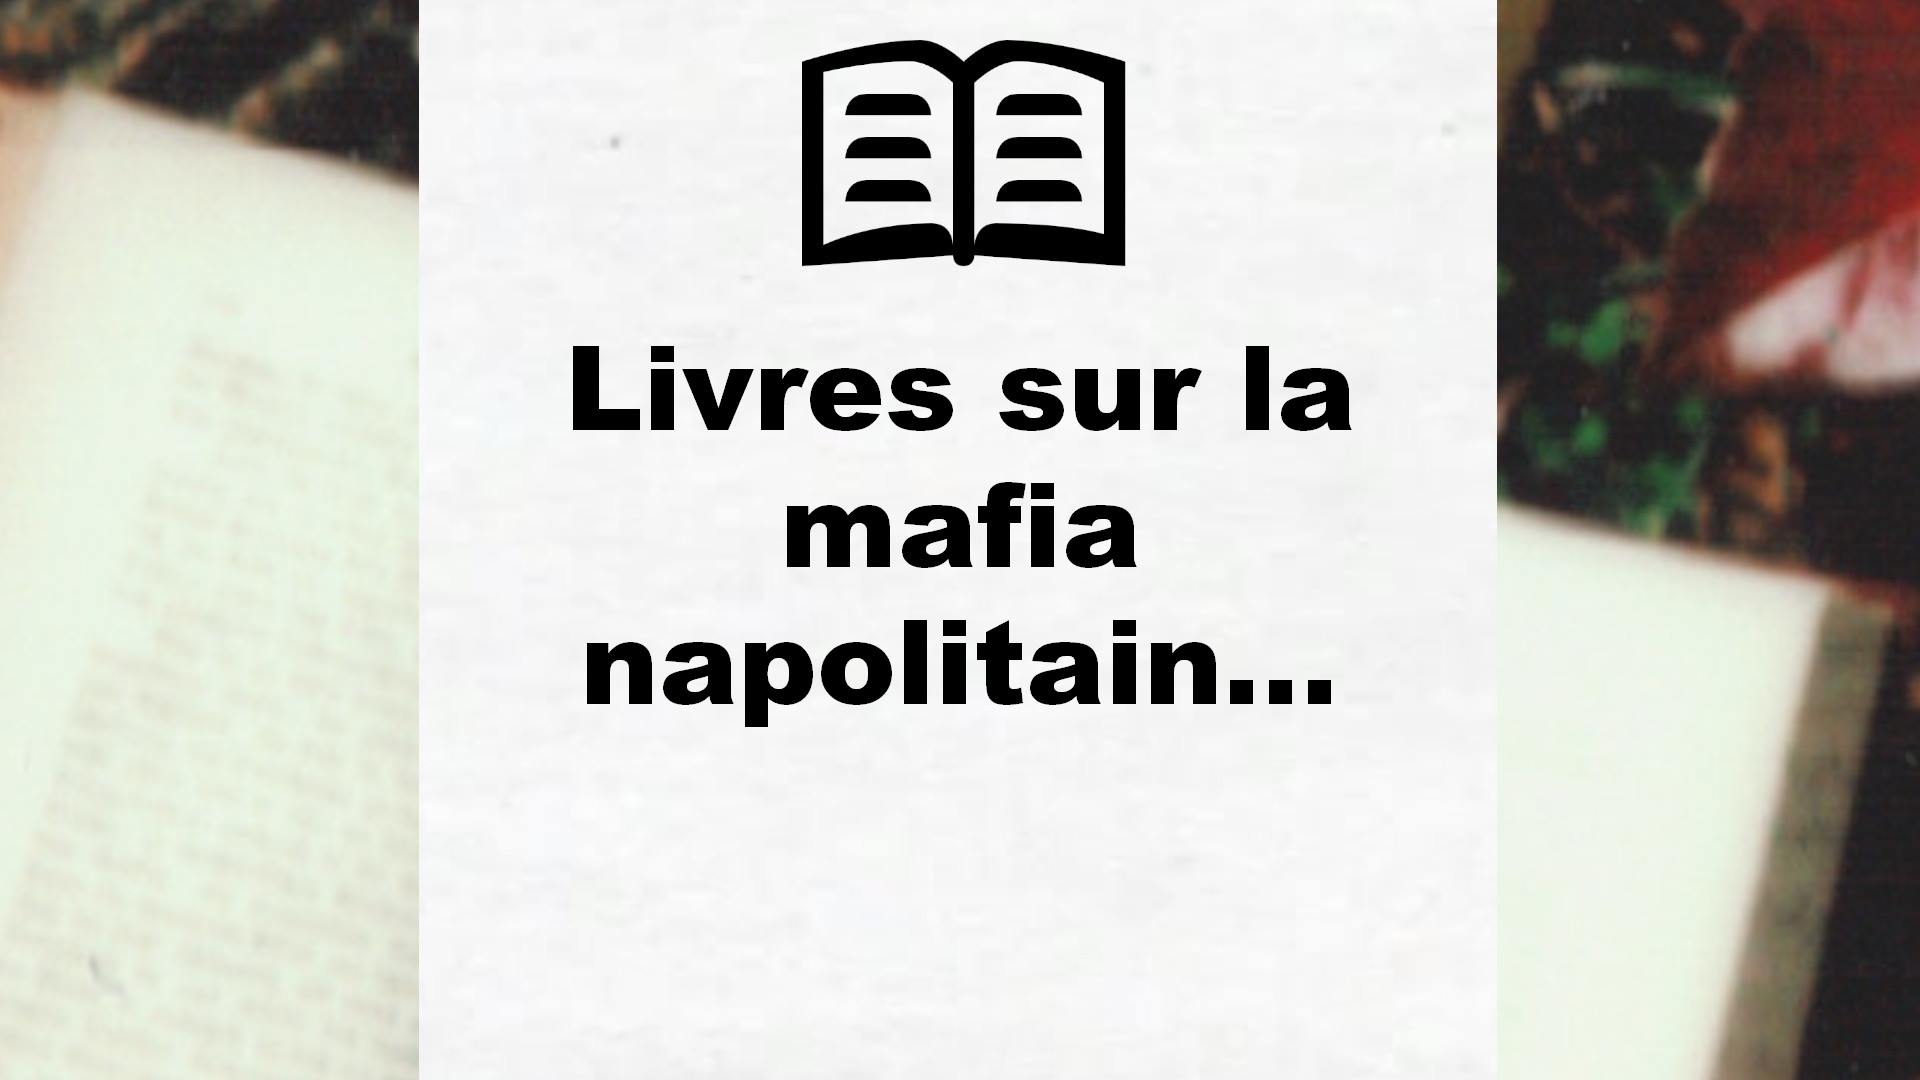 Livres sur la mafia napolitaine